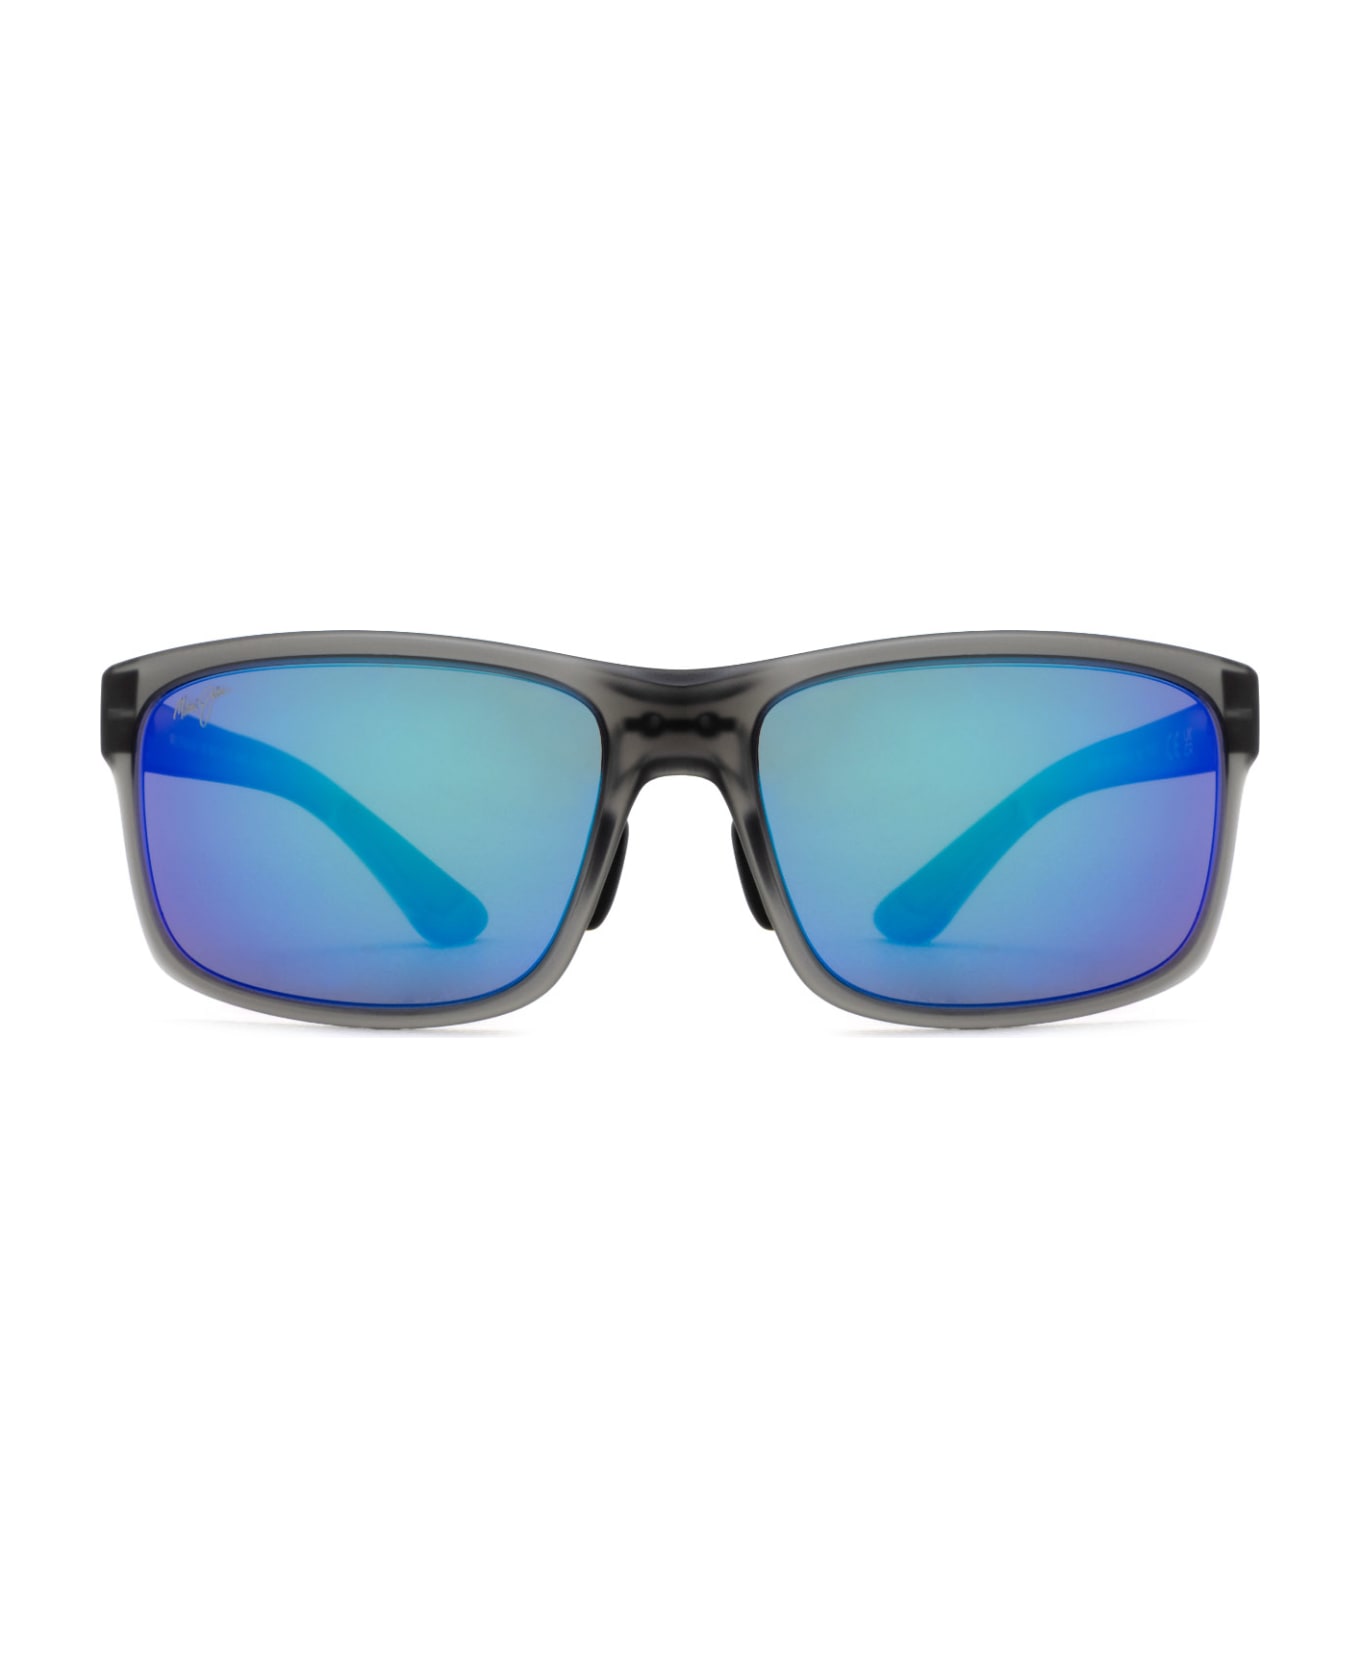 Maui Jim Mj439 Translucent Matte Grey Sunglasses - Translucent Matte Grey